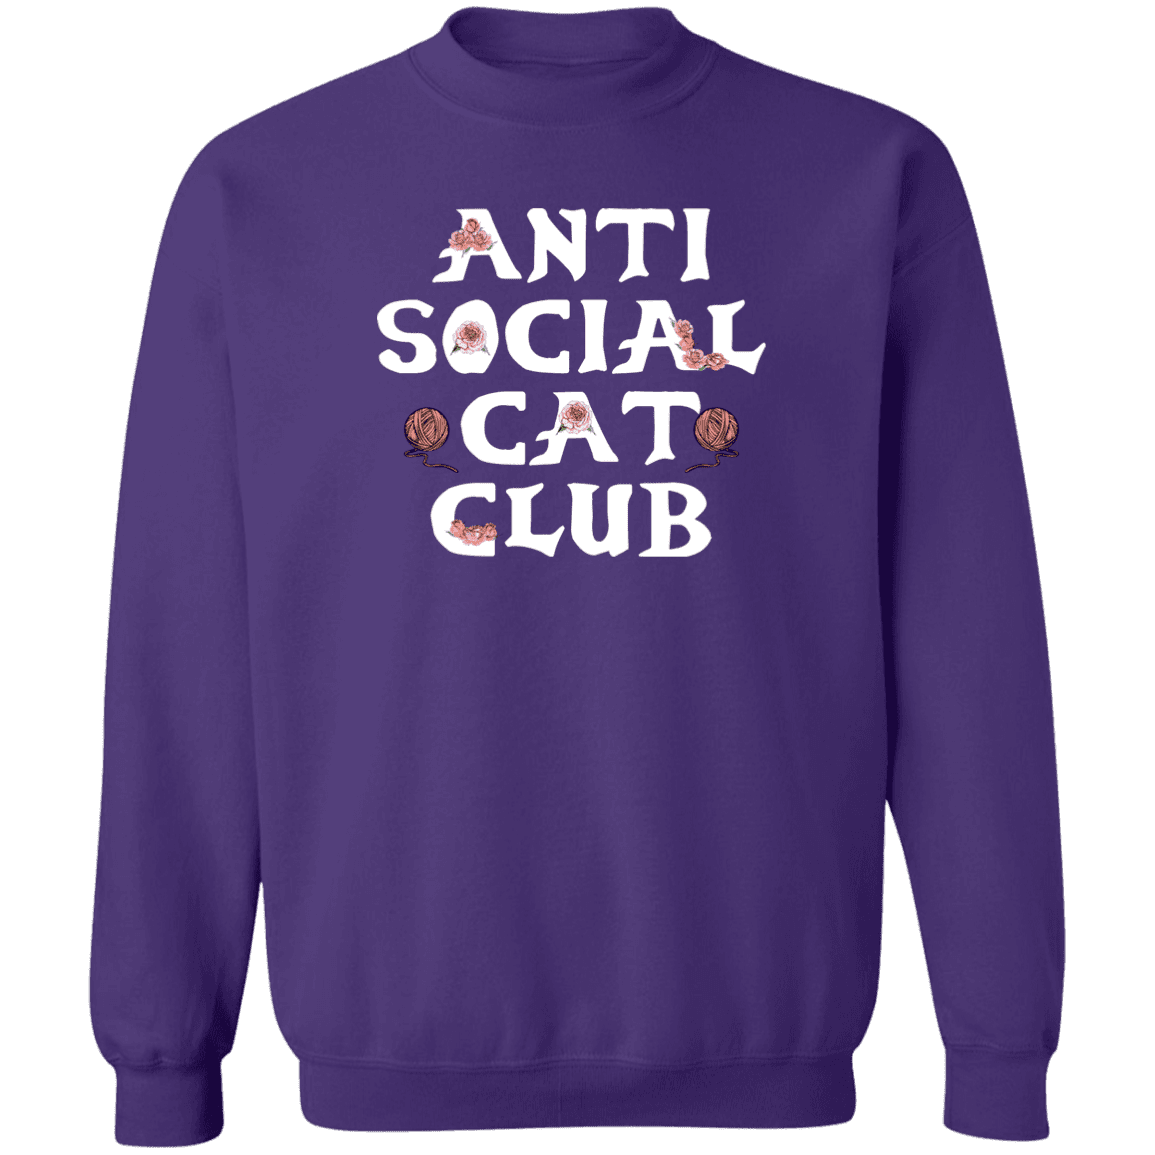 Anti Social Cat Club - Sweatshirt.